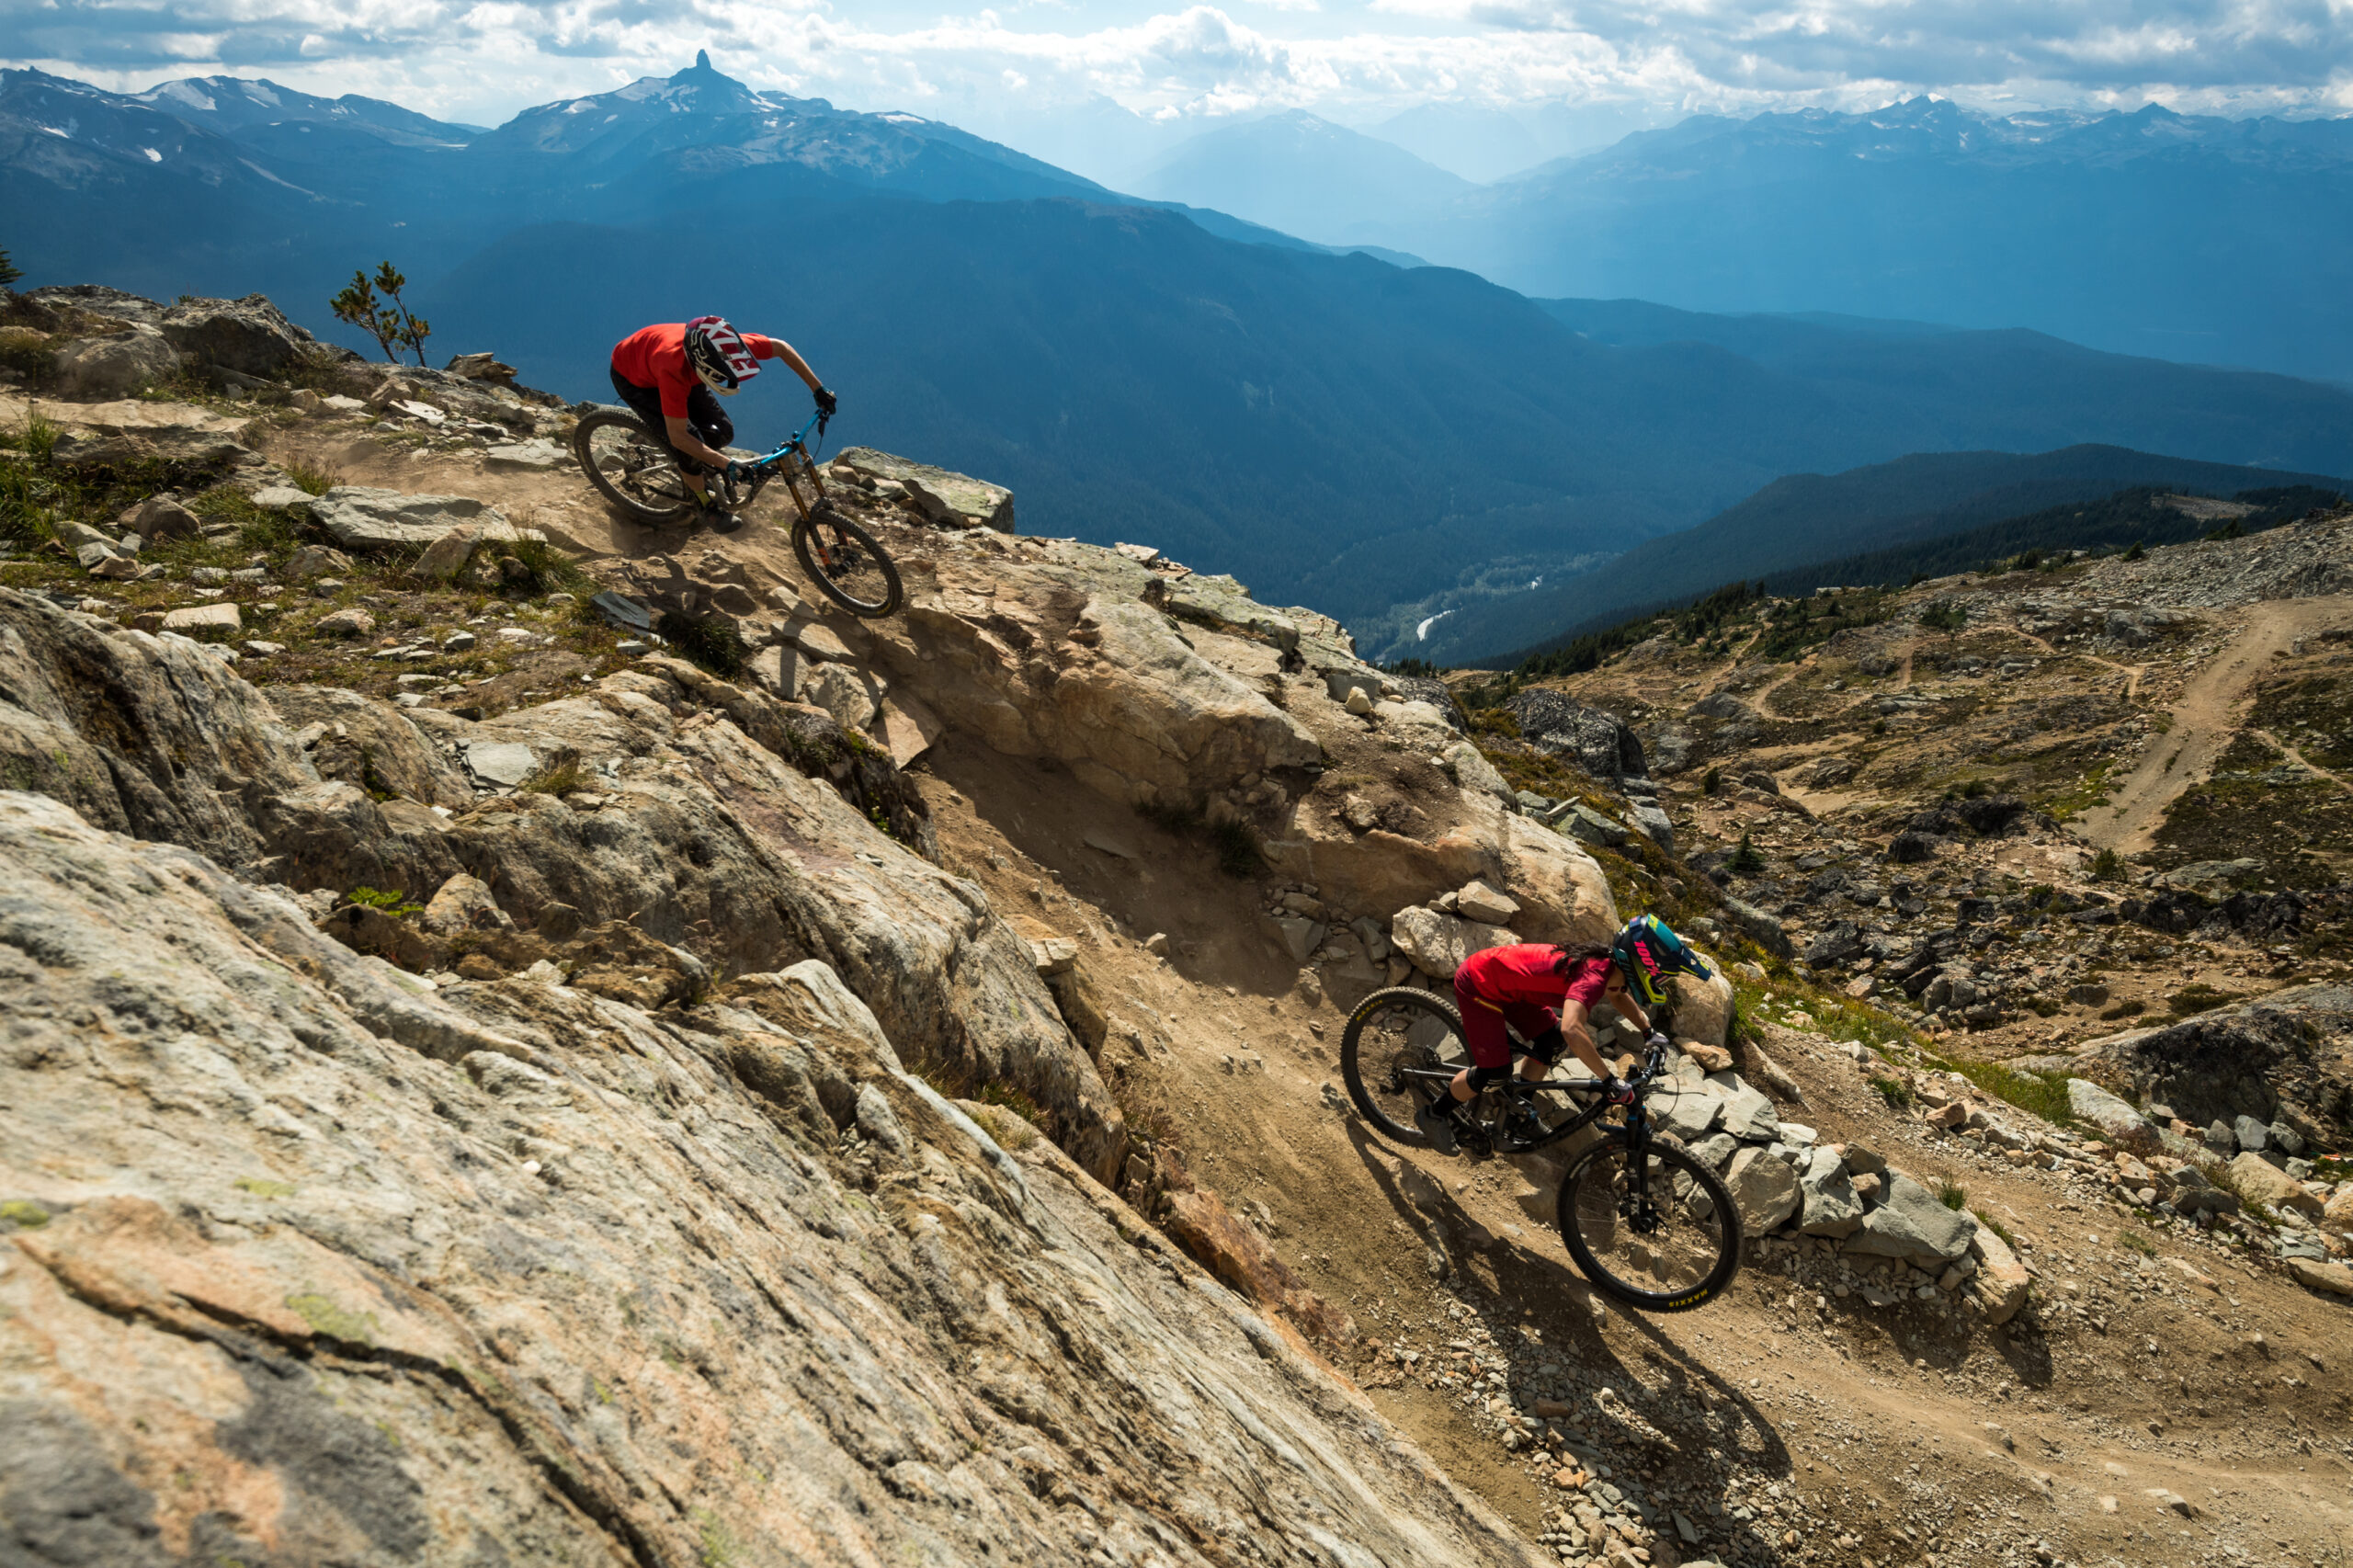 Mountain bikers riding over rocks in Whistler bike park